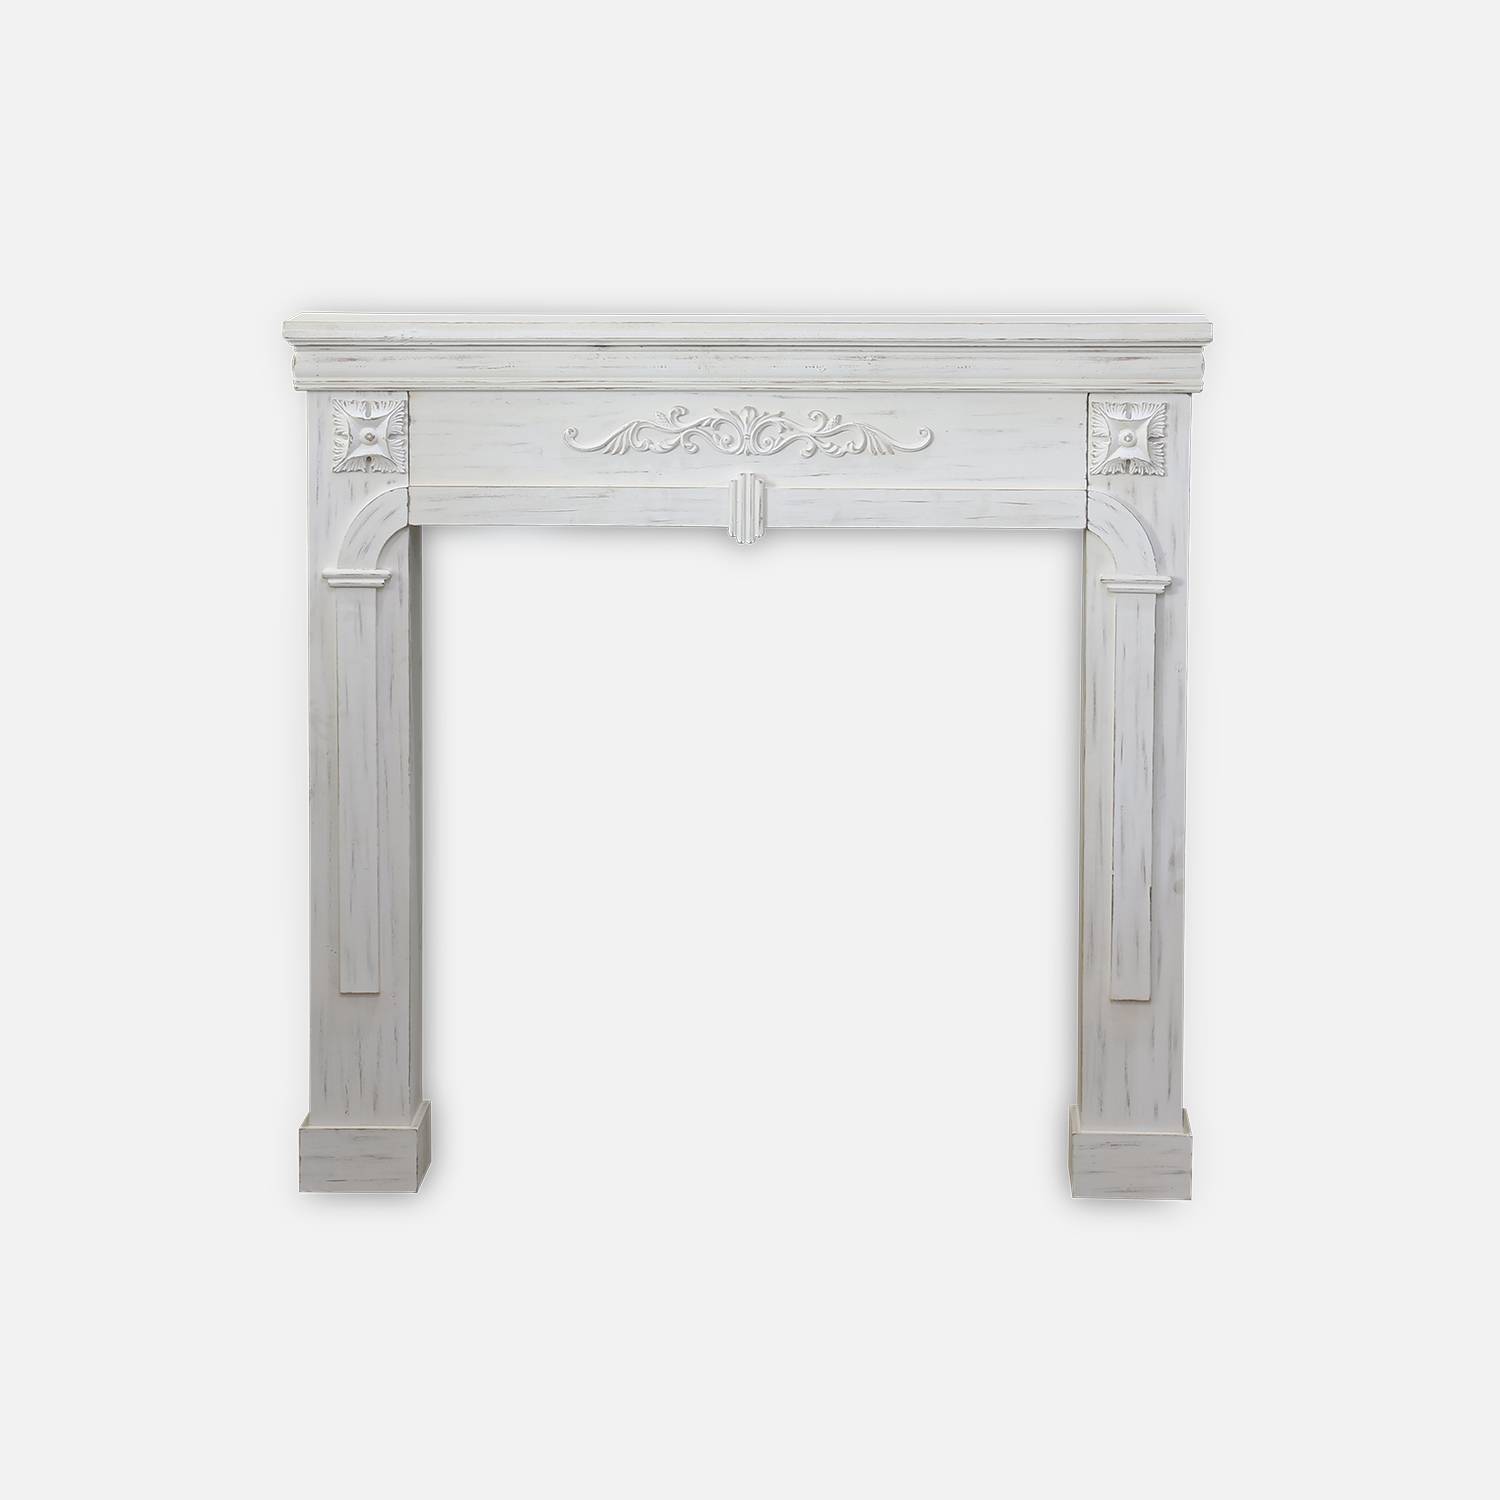 Decorative fireplace surround, MDF with firwood veneer, 104x17x100cm - Romance - Vintage White,sweeek,Photo2